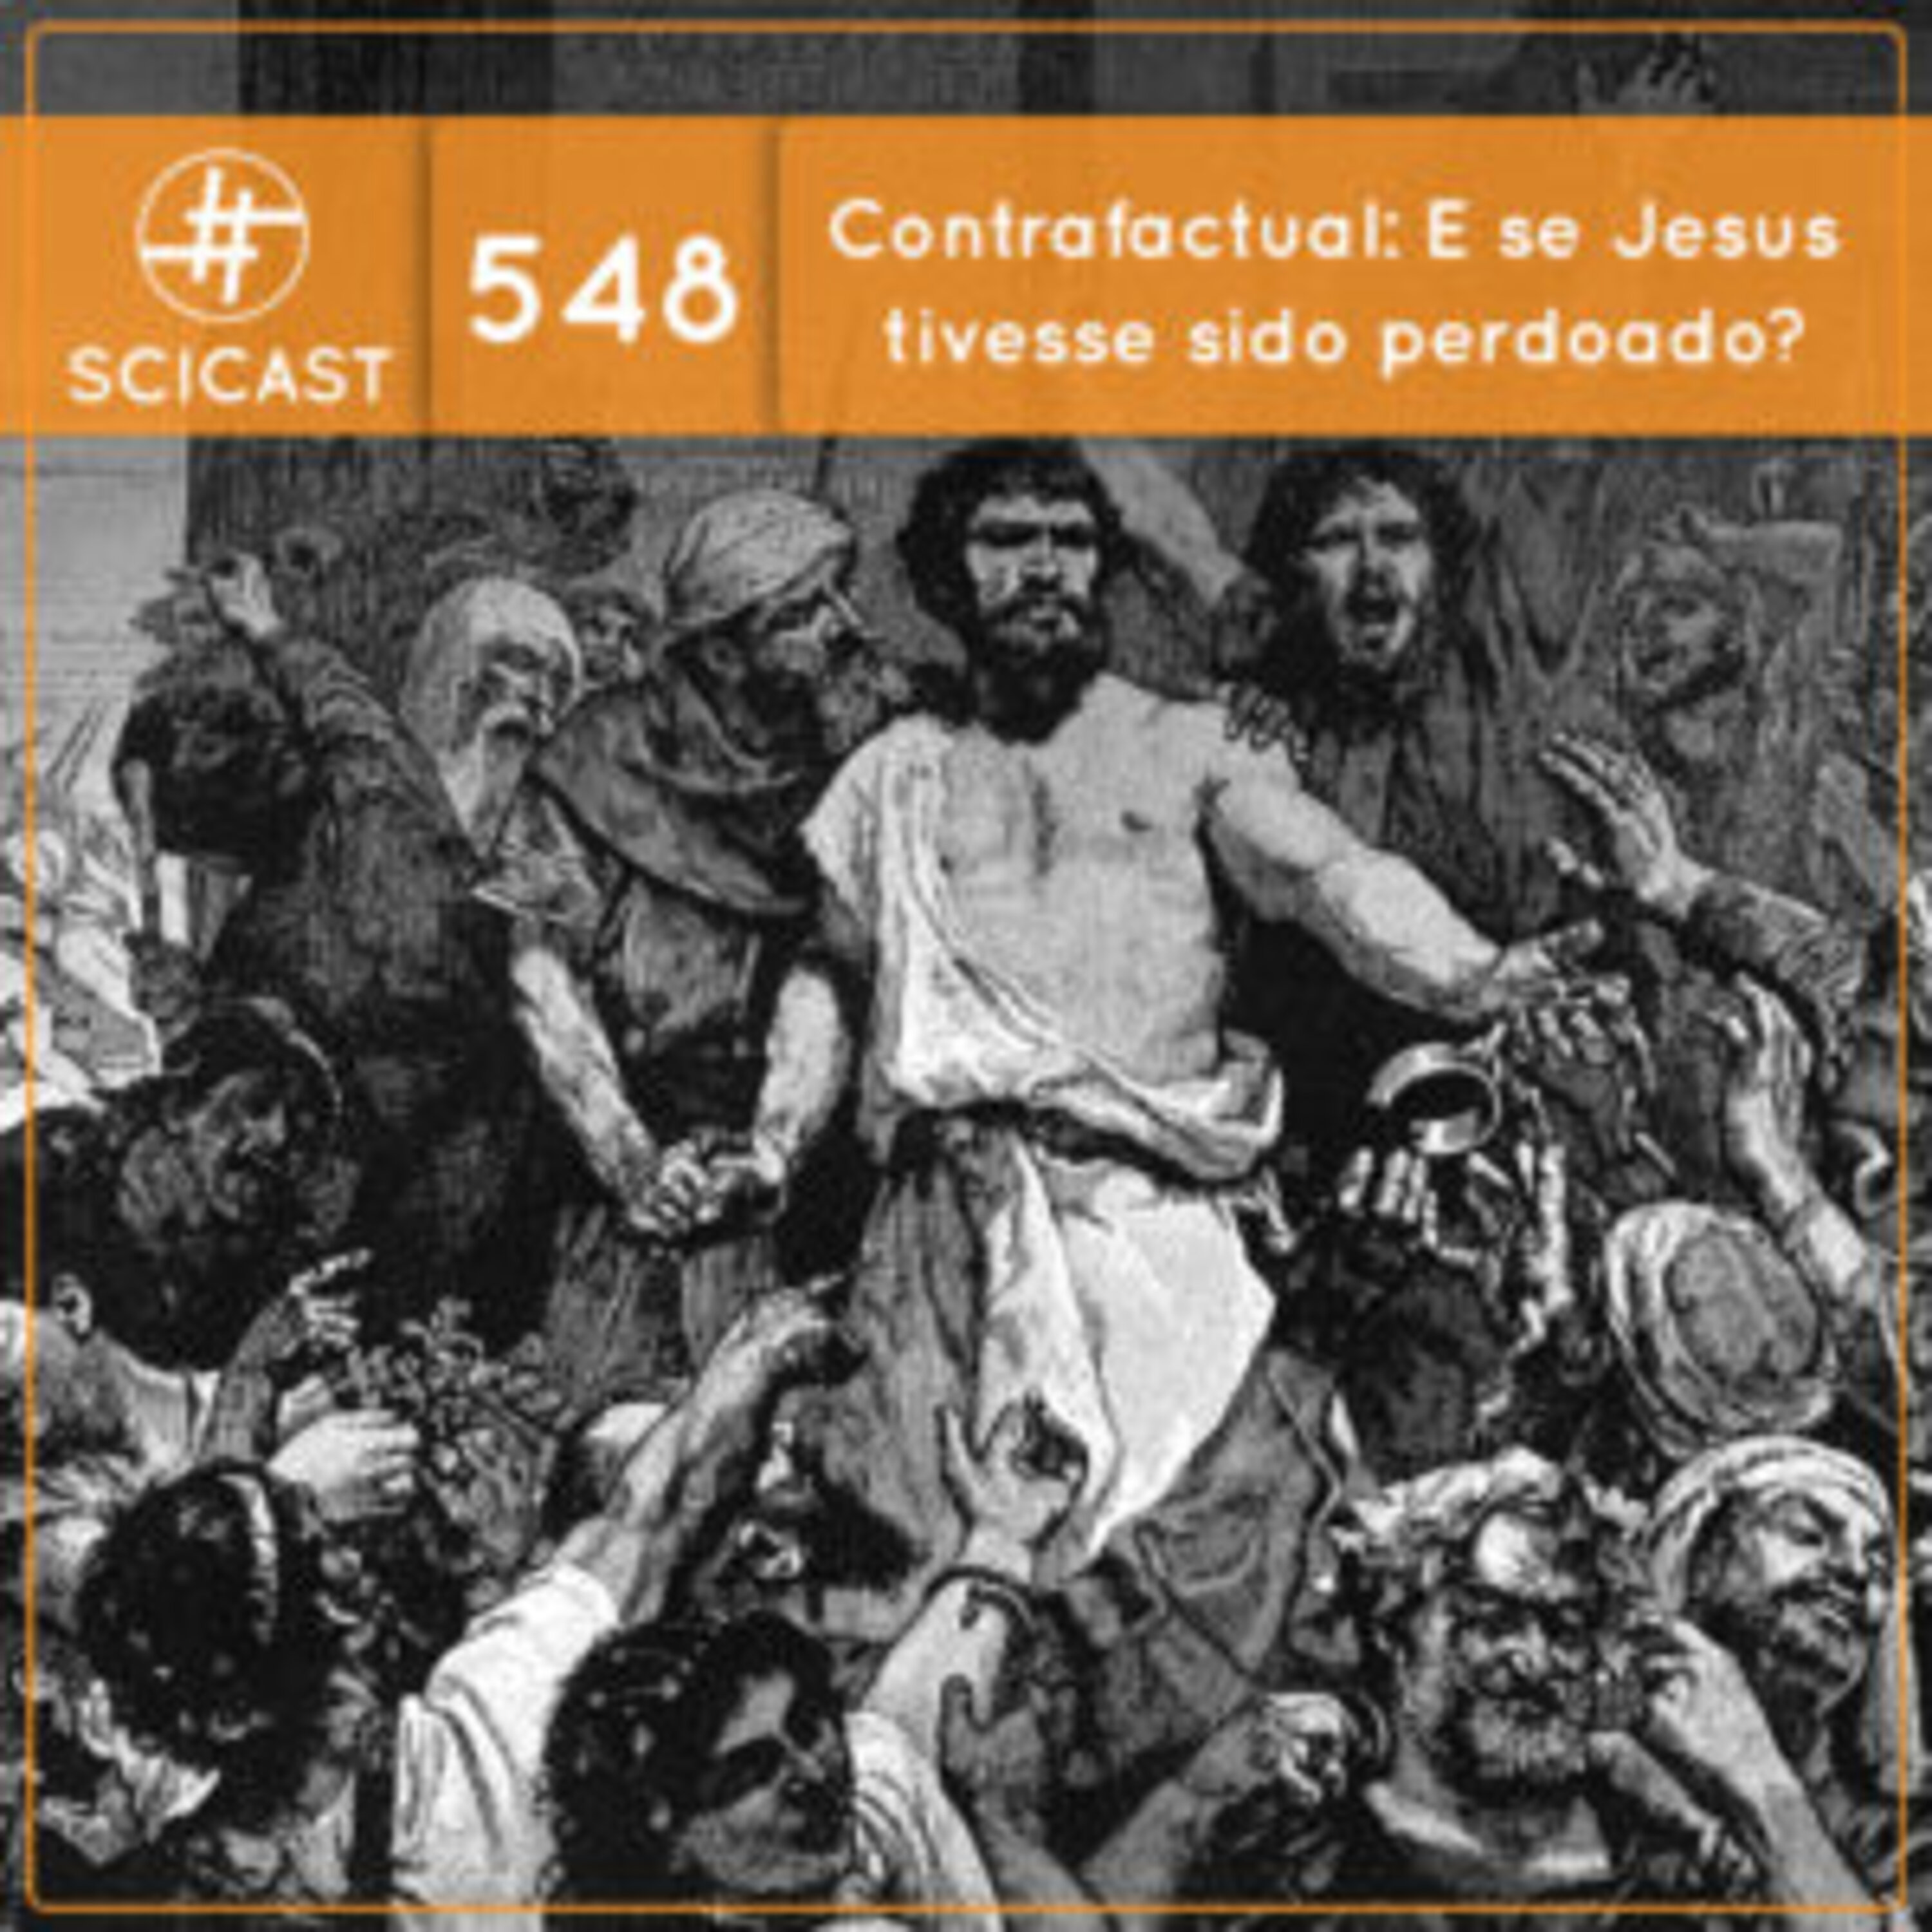 Contrafactual: E se Jesus tivesse sido perdoado?  (SciCast #548)